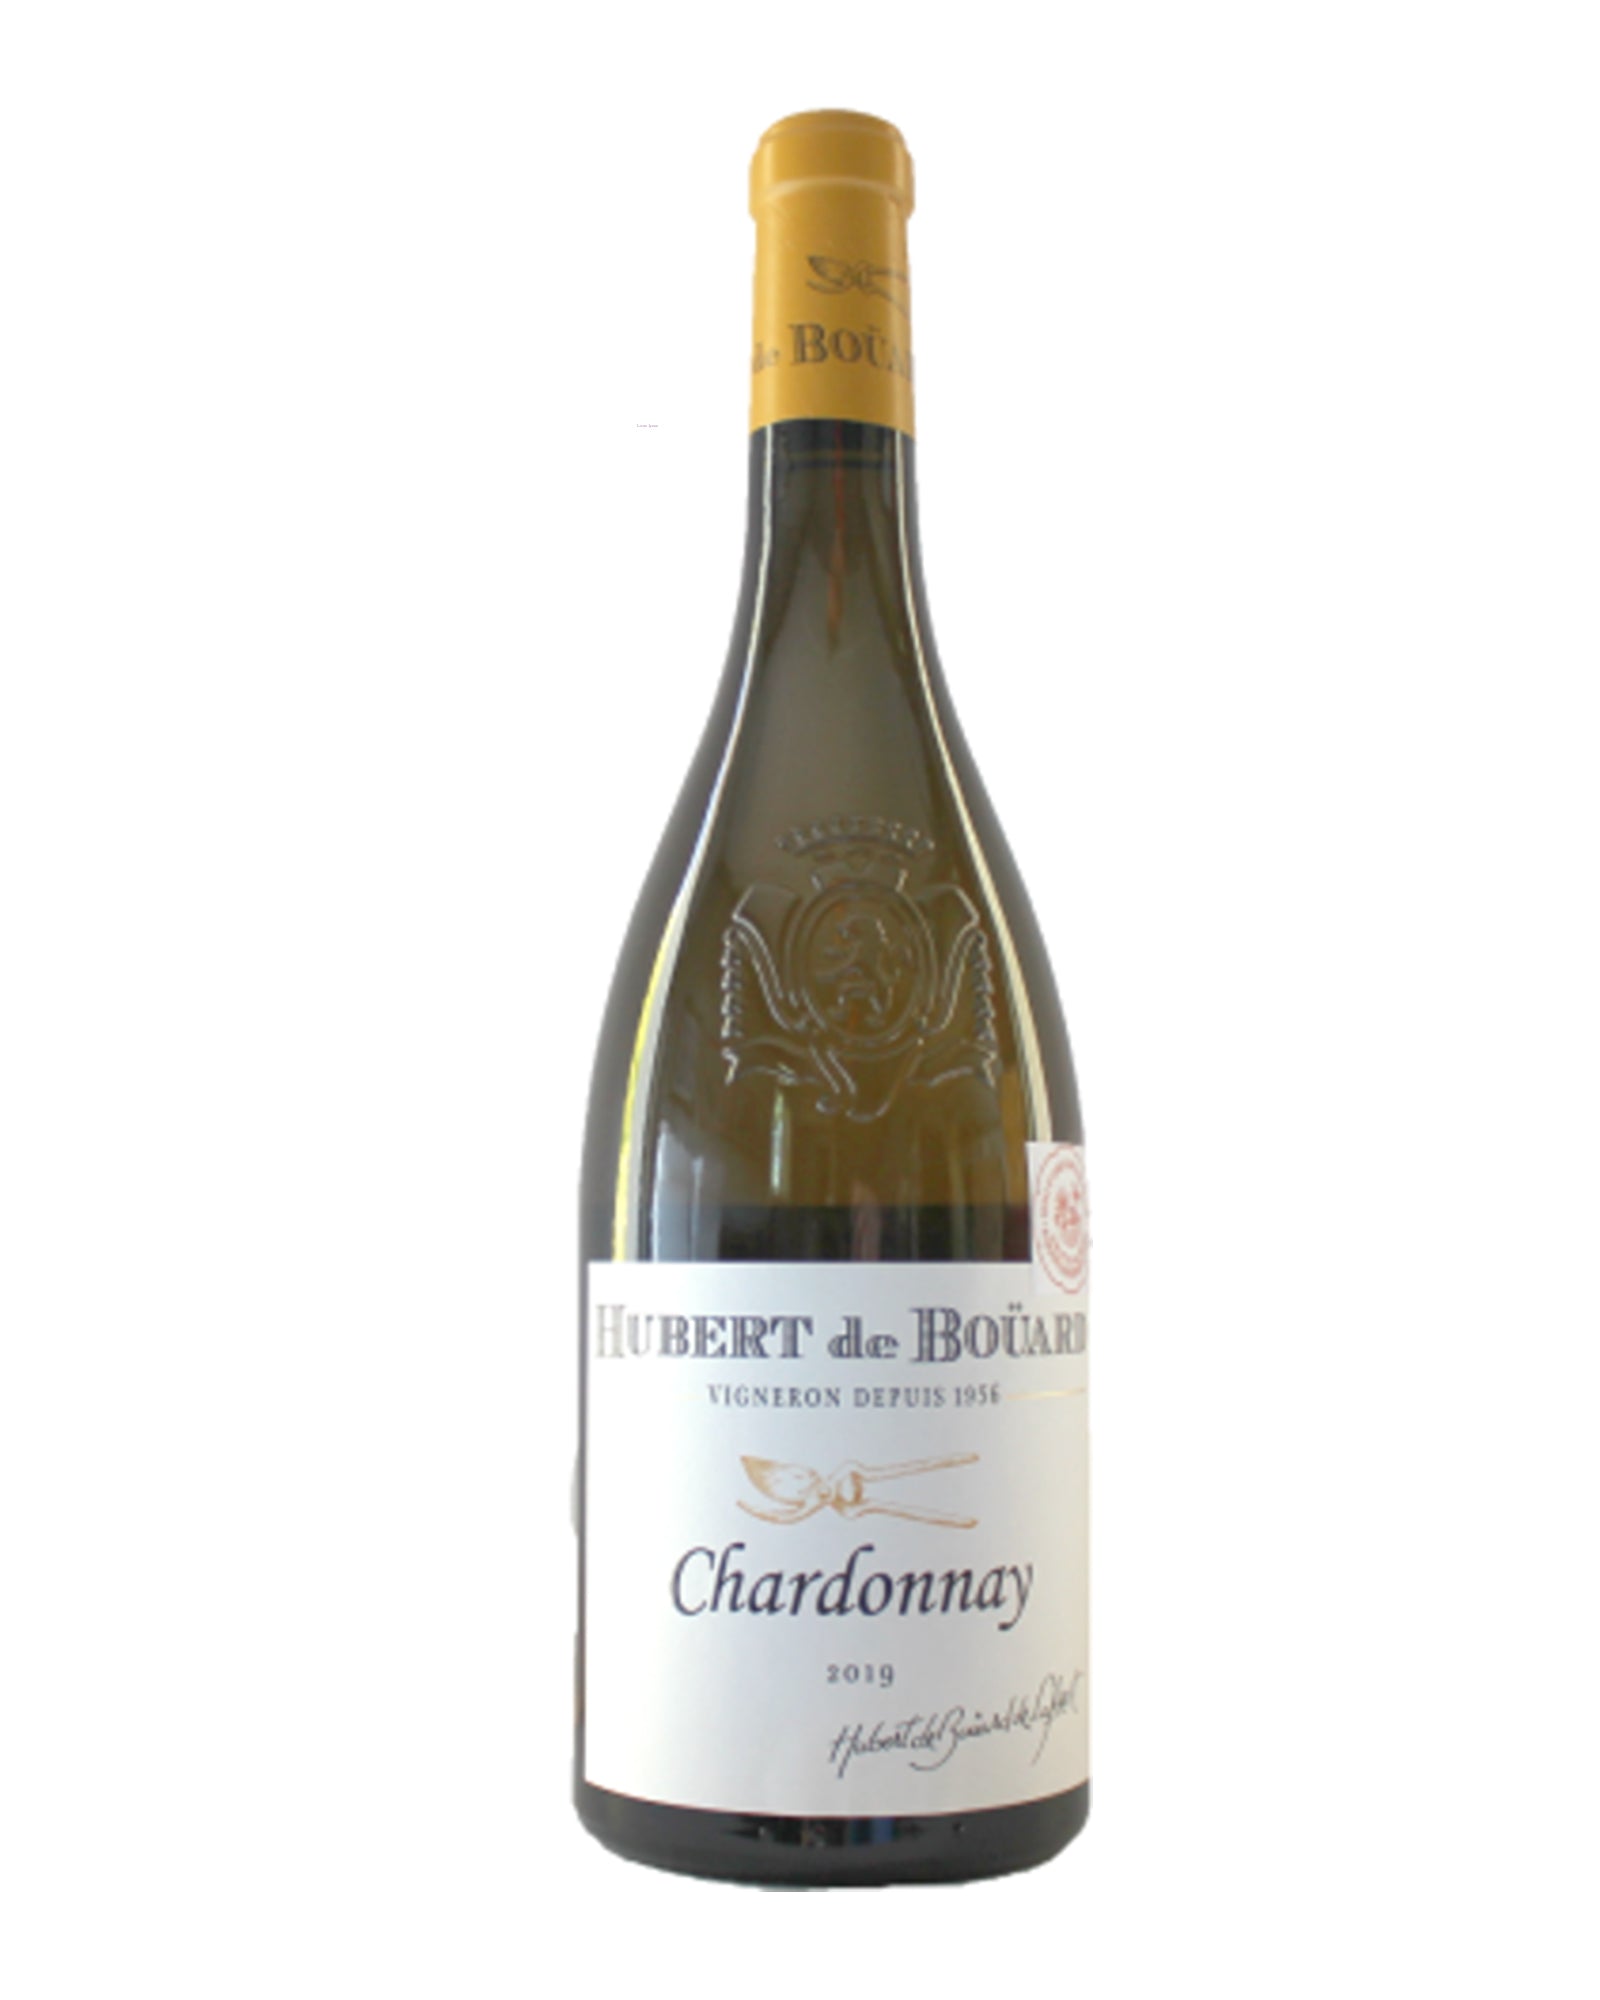 IGP de l'atlantique blanc sec Hubert de Bouard Chardonnay 2019